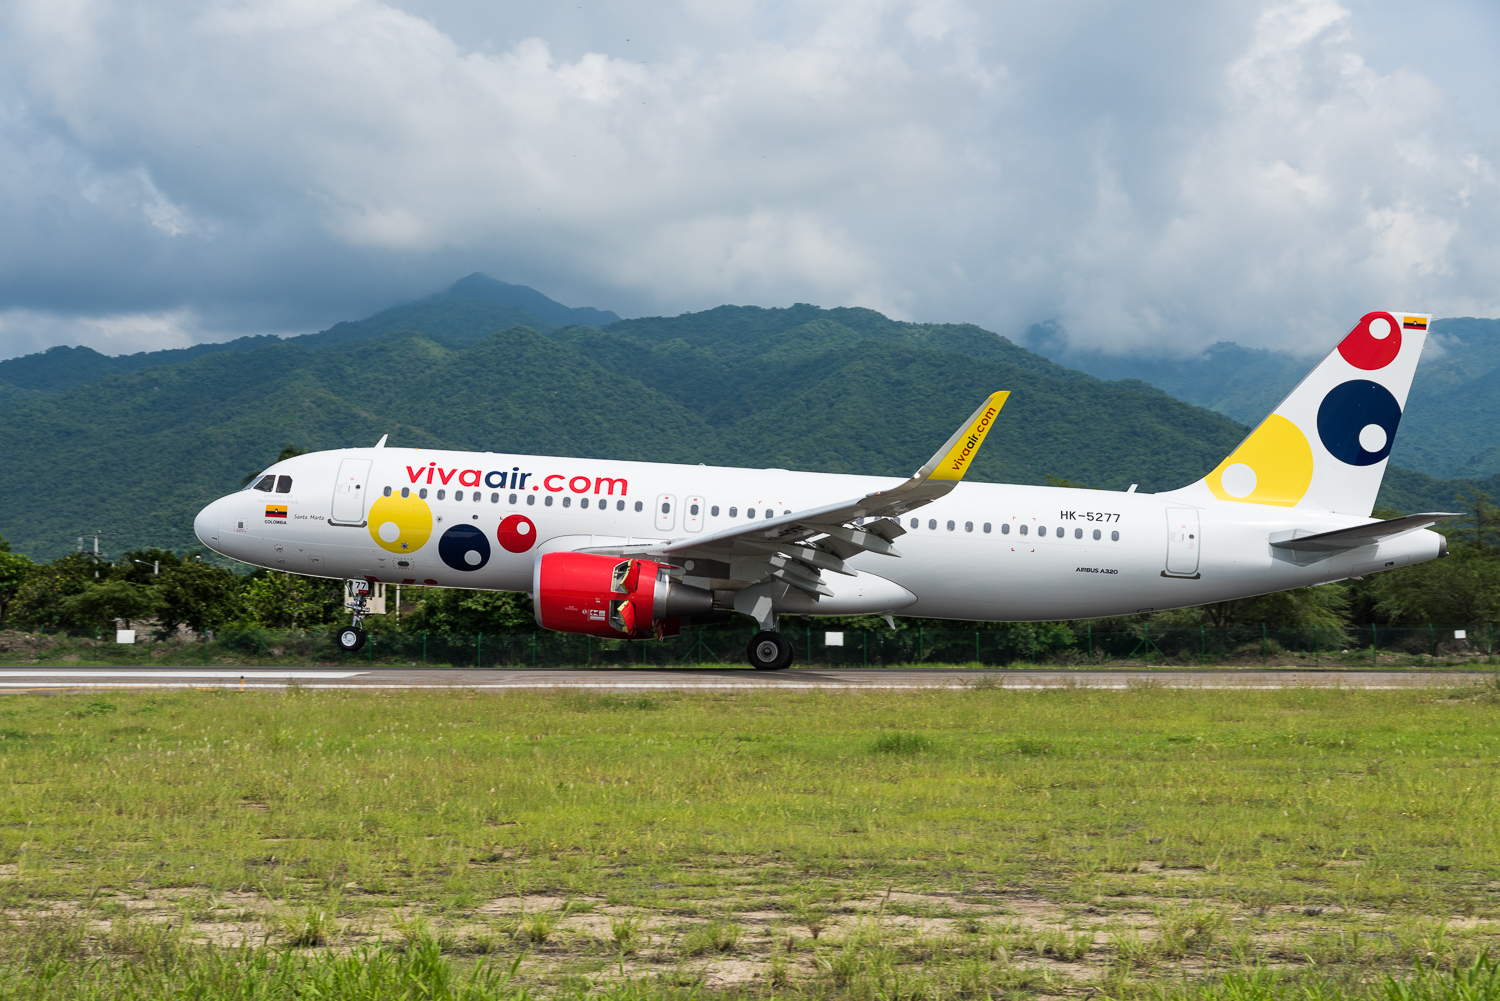 Airline Viva Air announces Medellín as new hub, expands flight